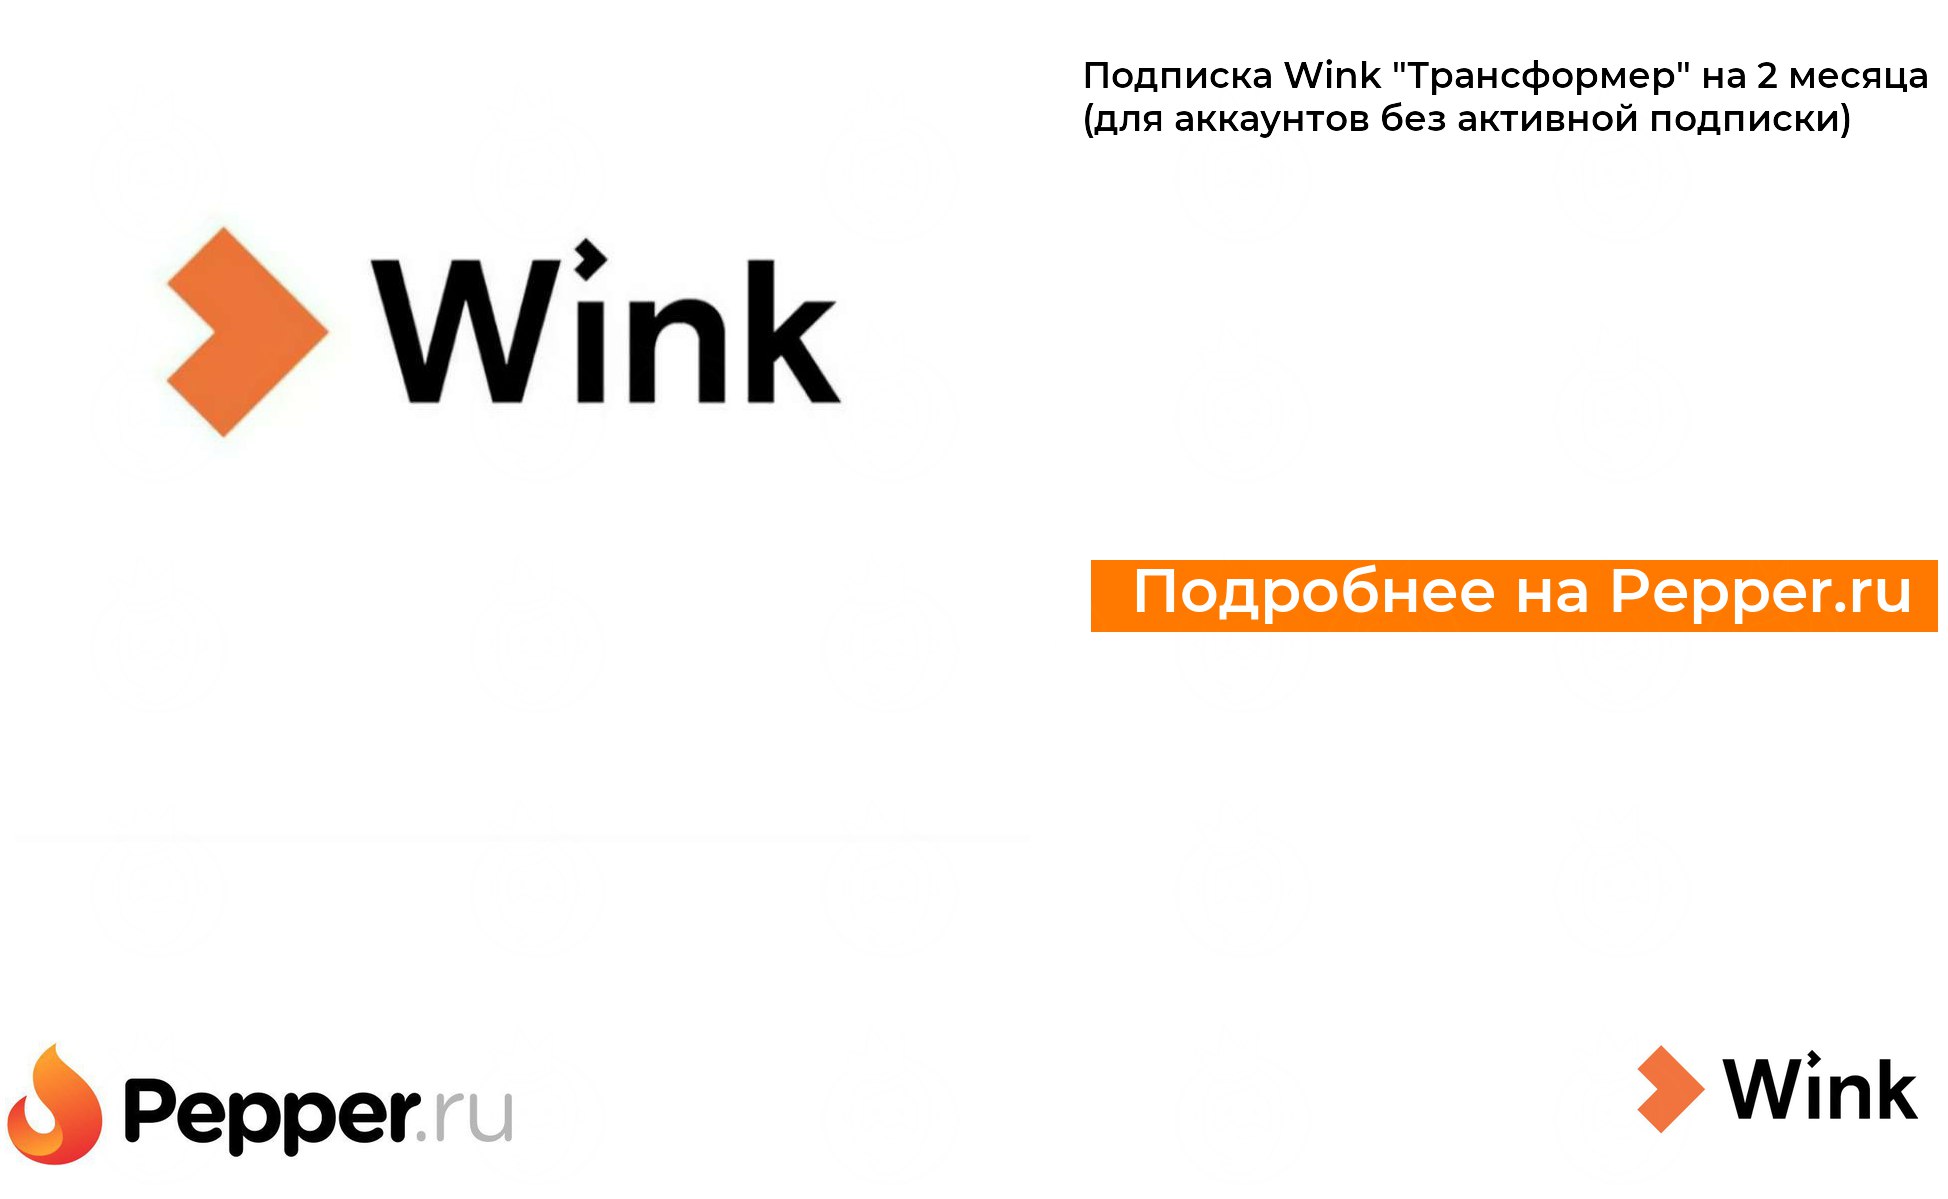 Wink промокод апрель. Подписка трансформер wink. Промокод на подписку трансформер wink. Подписка трансформер wink что входит. Wink трансформер.